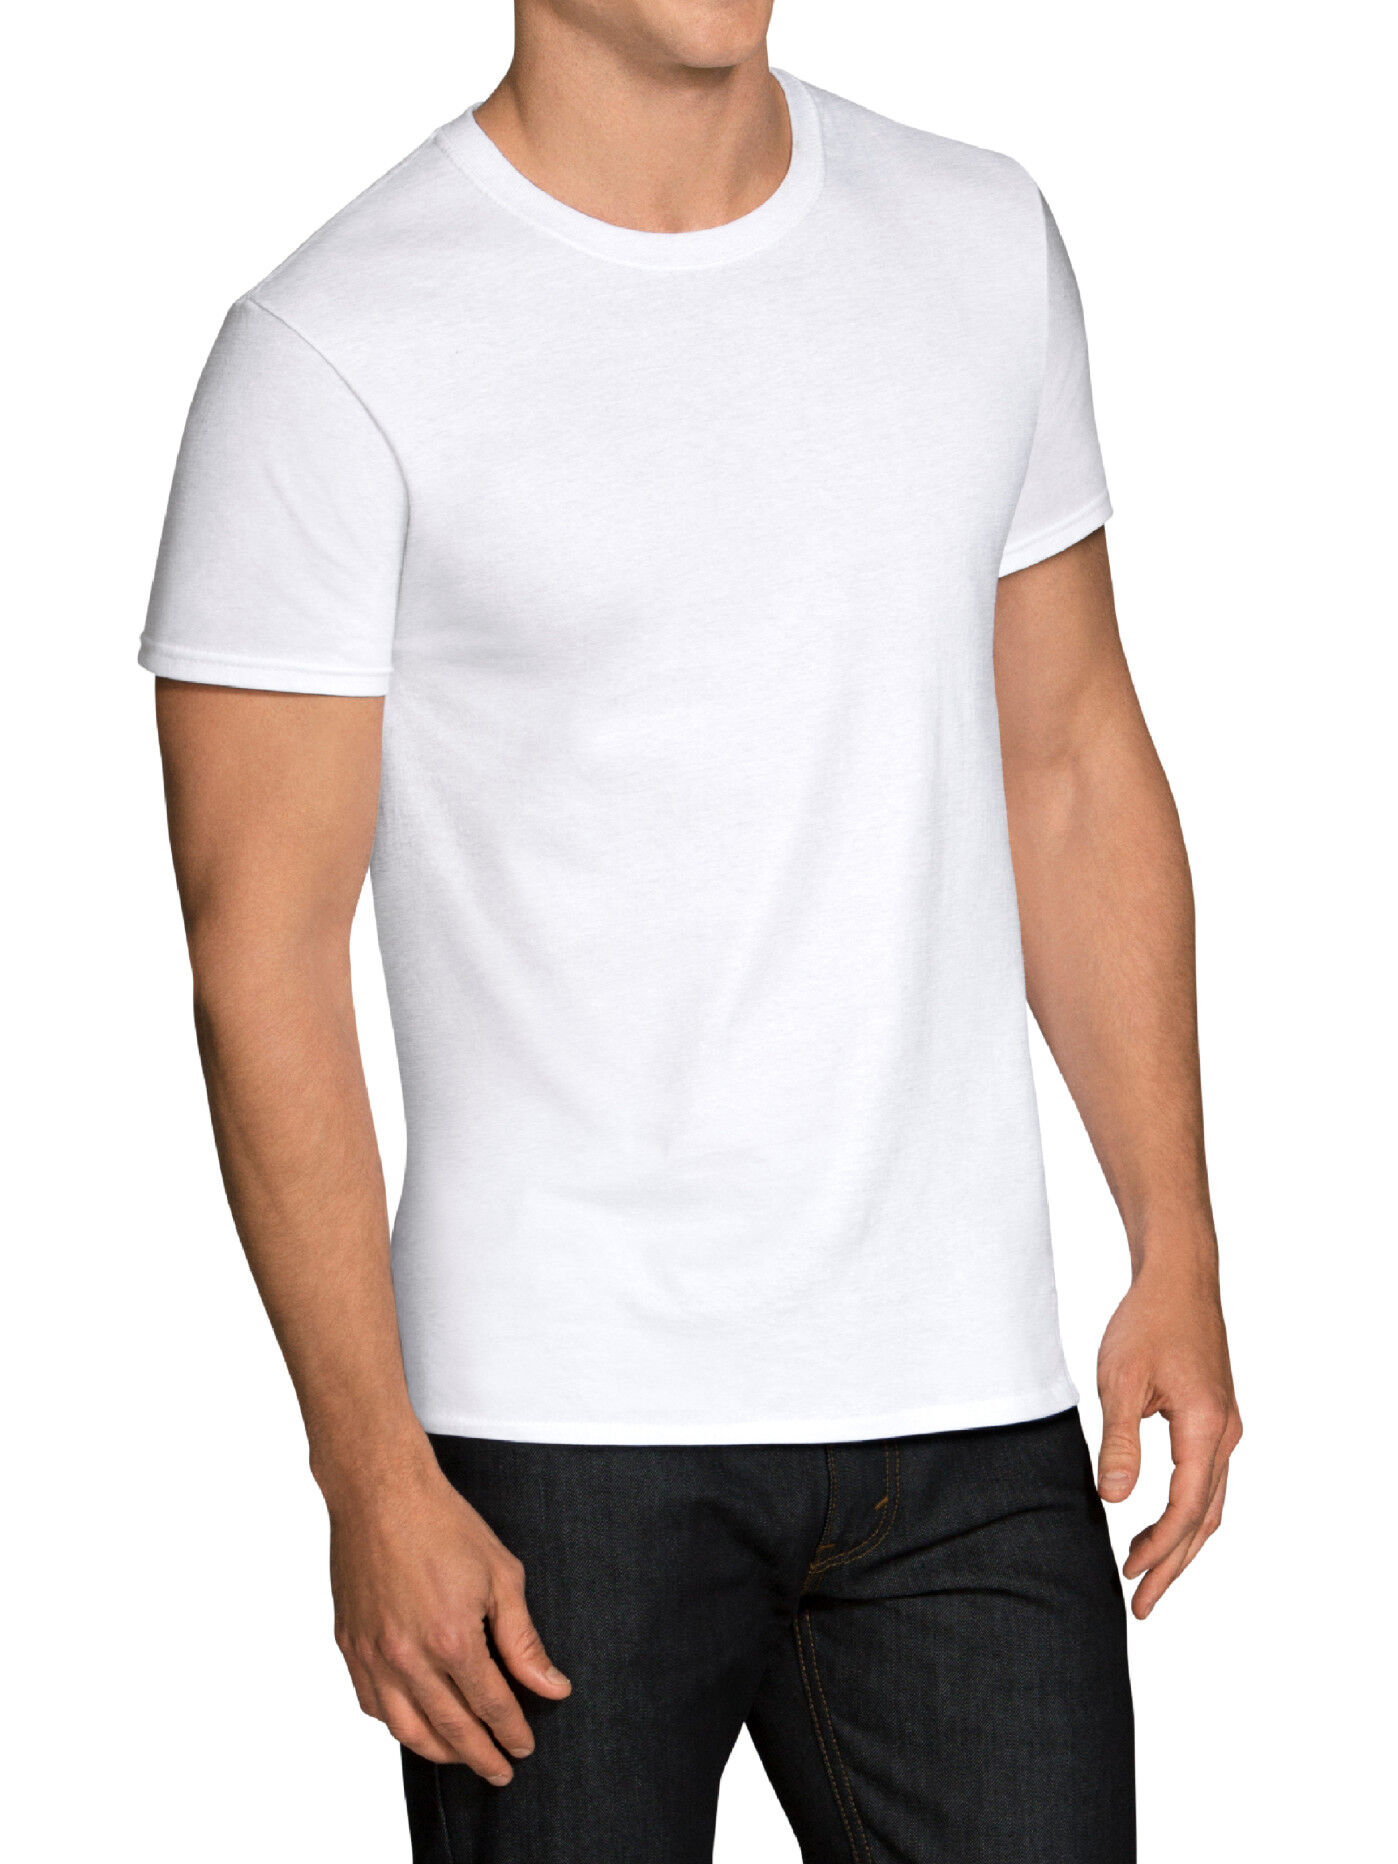 classic white t shirt